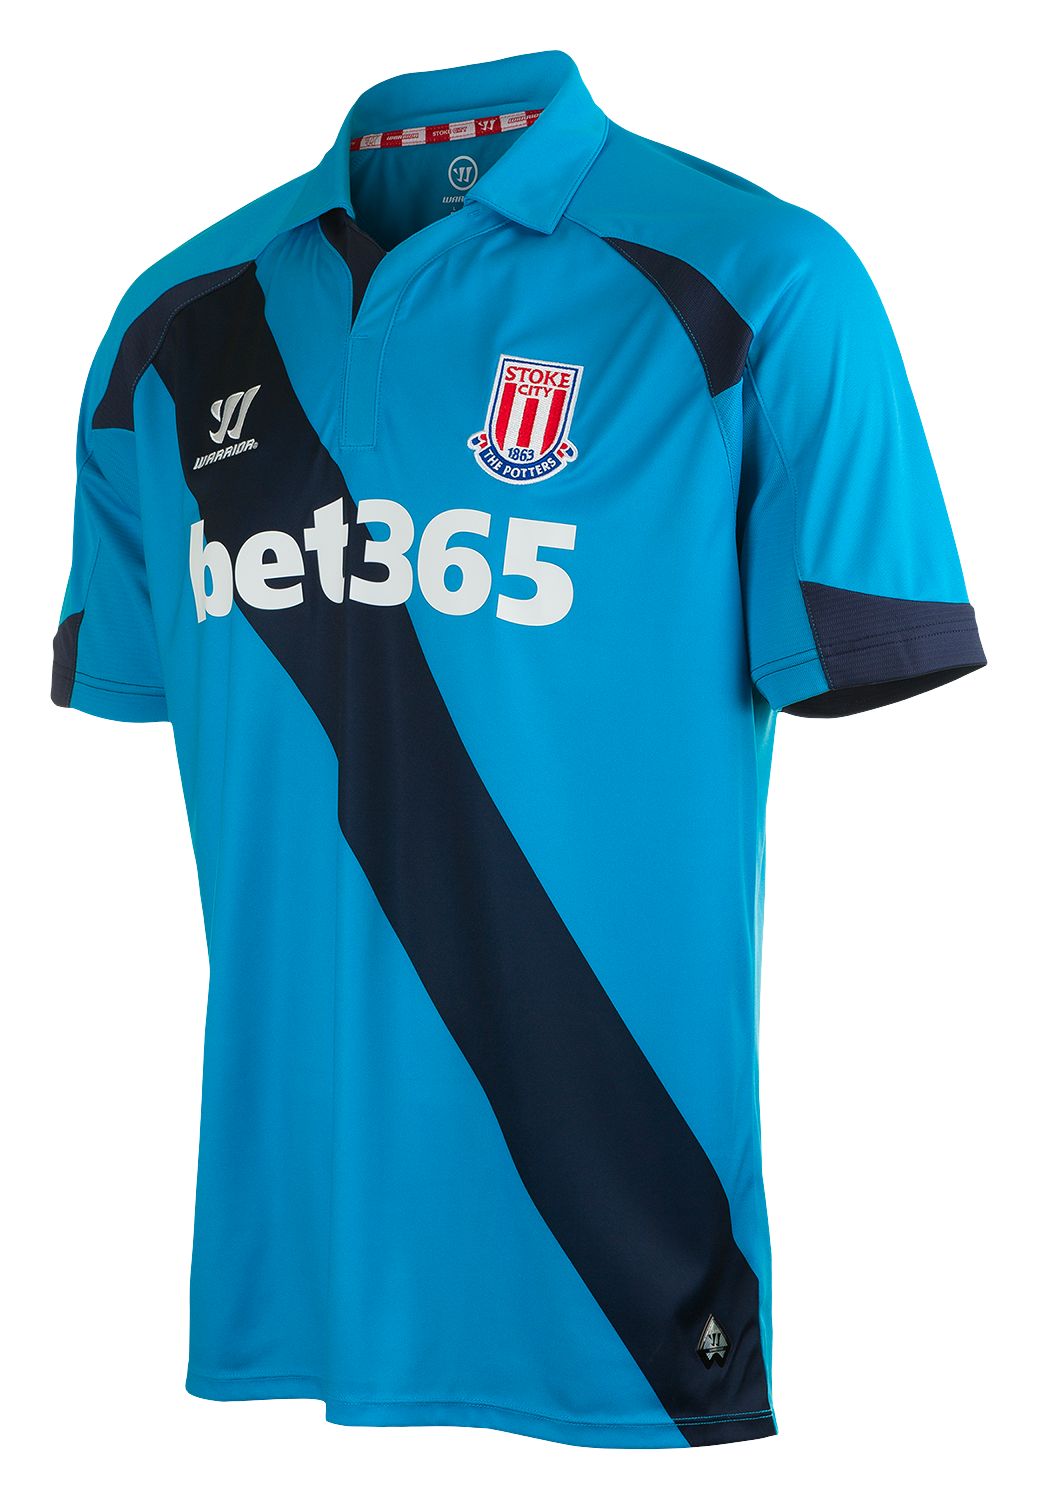 Stoke City Away Kit 2014/15, Blue image number 1